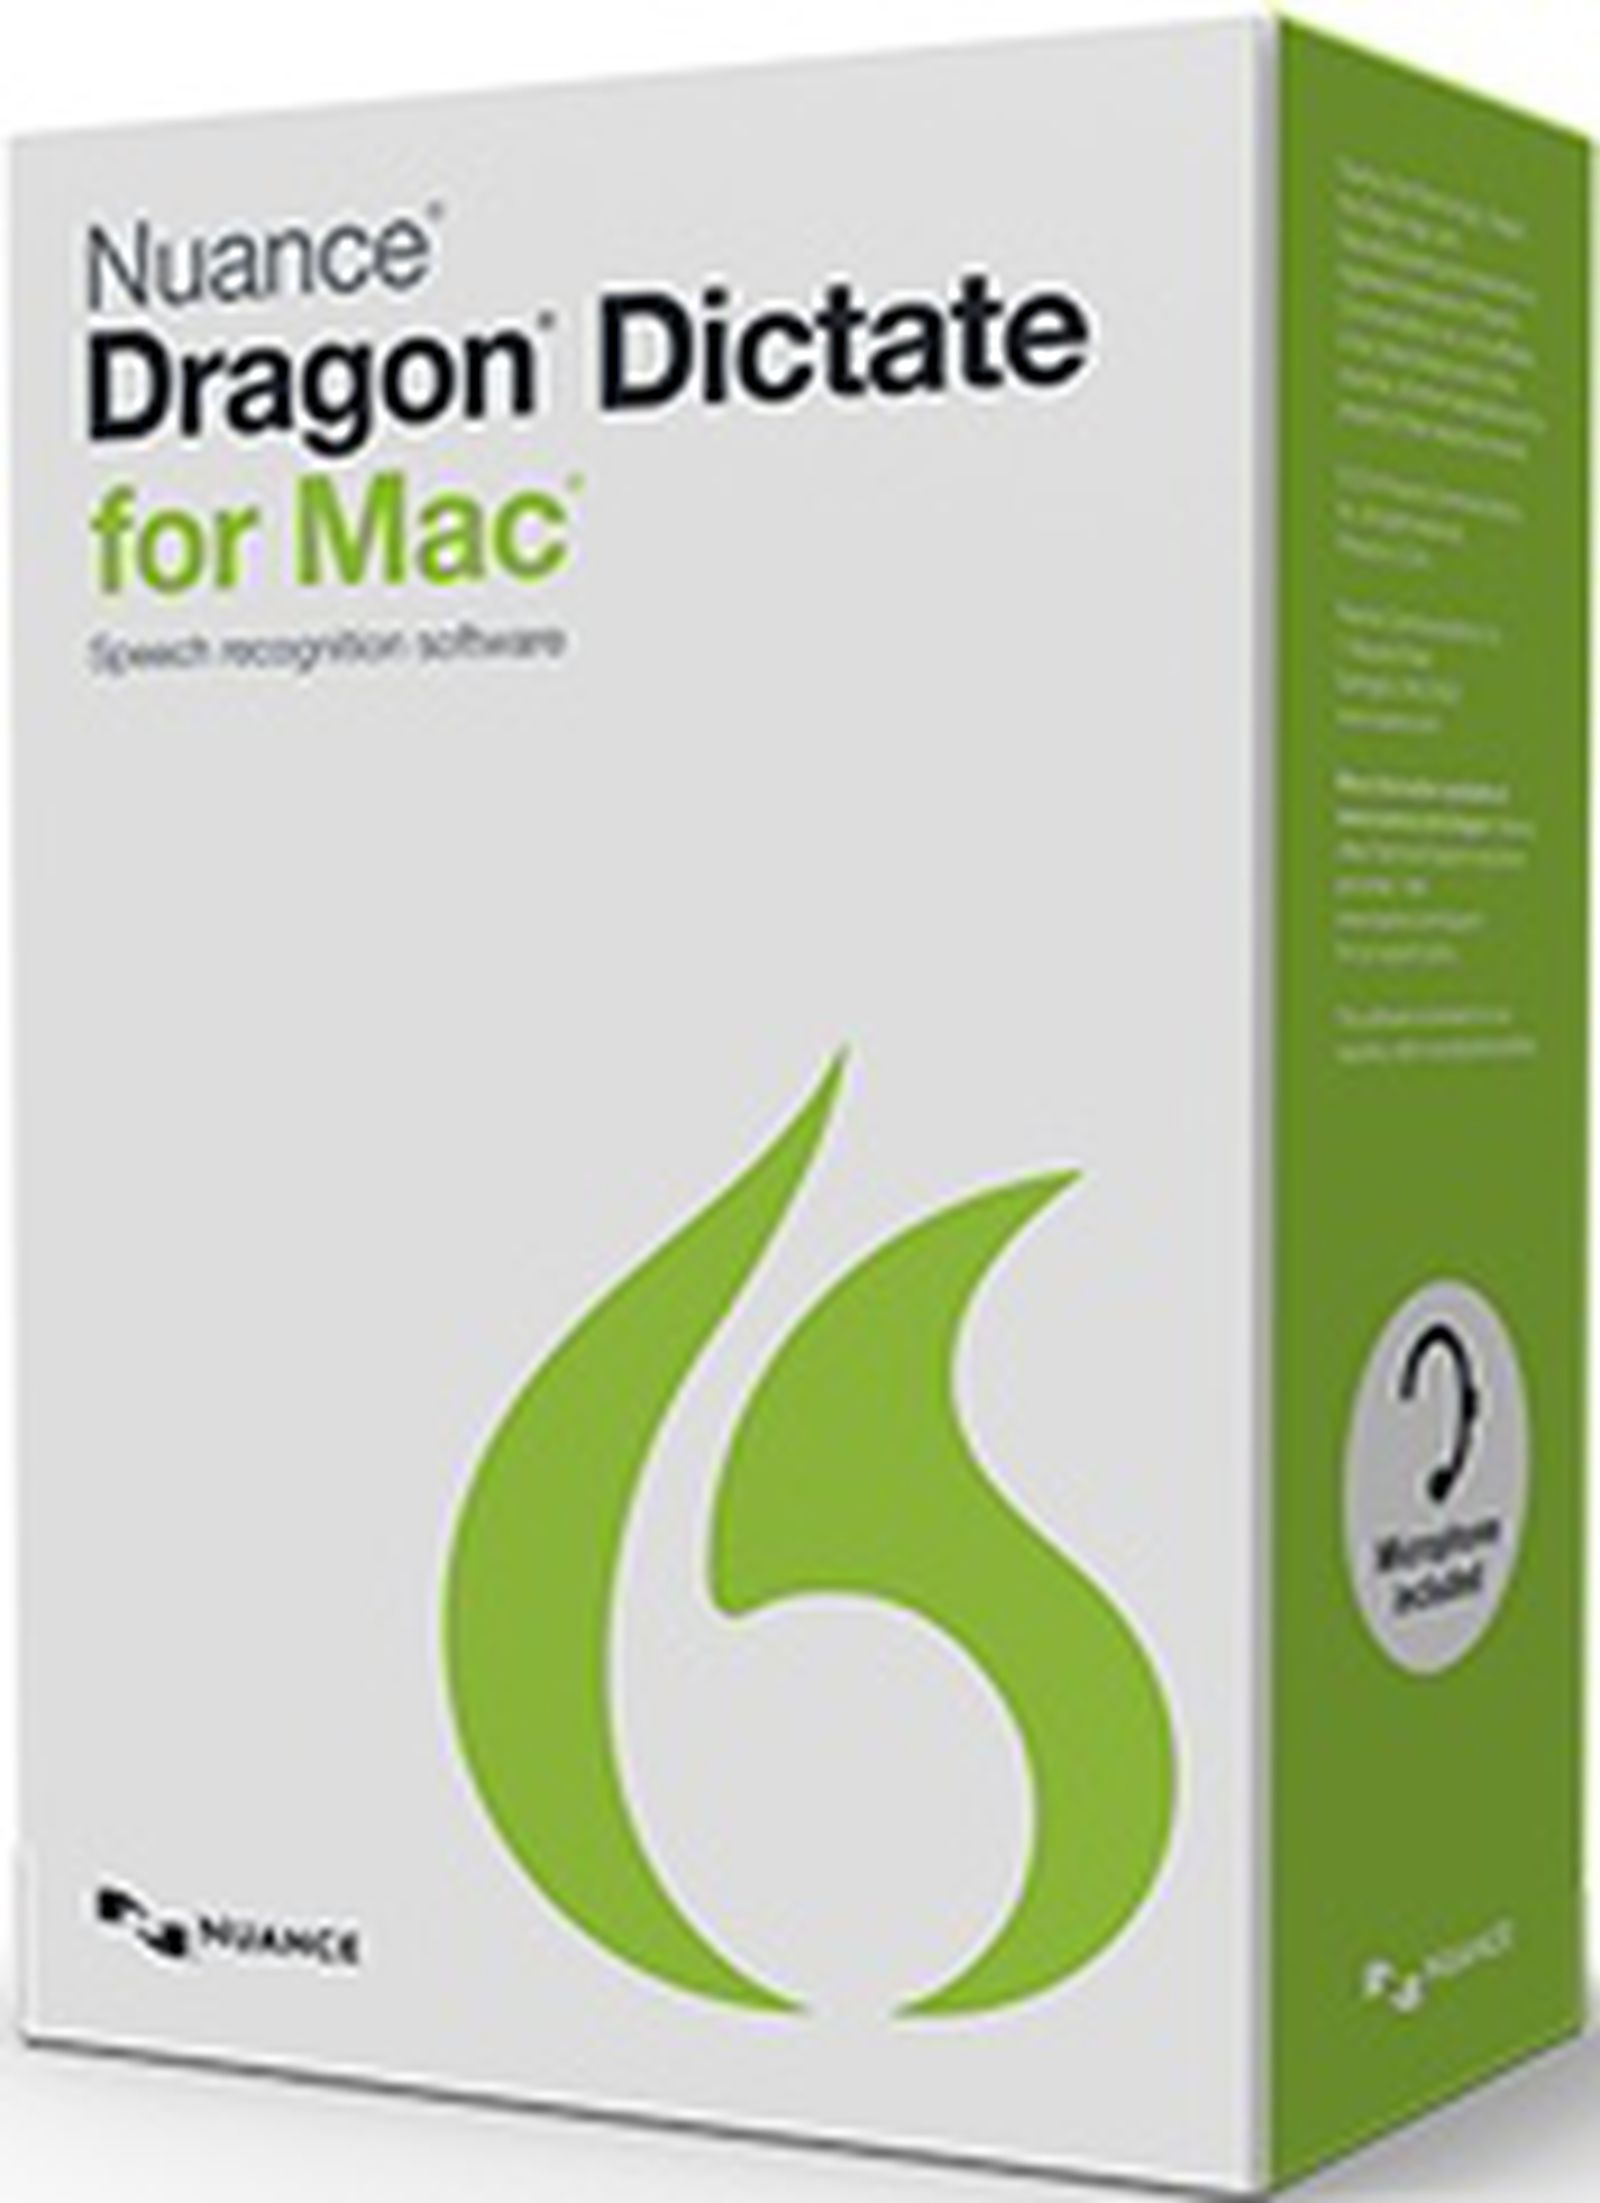 dragon dictation mac review